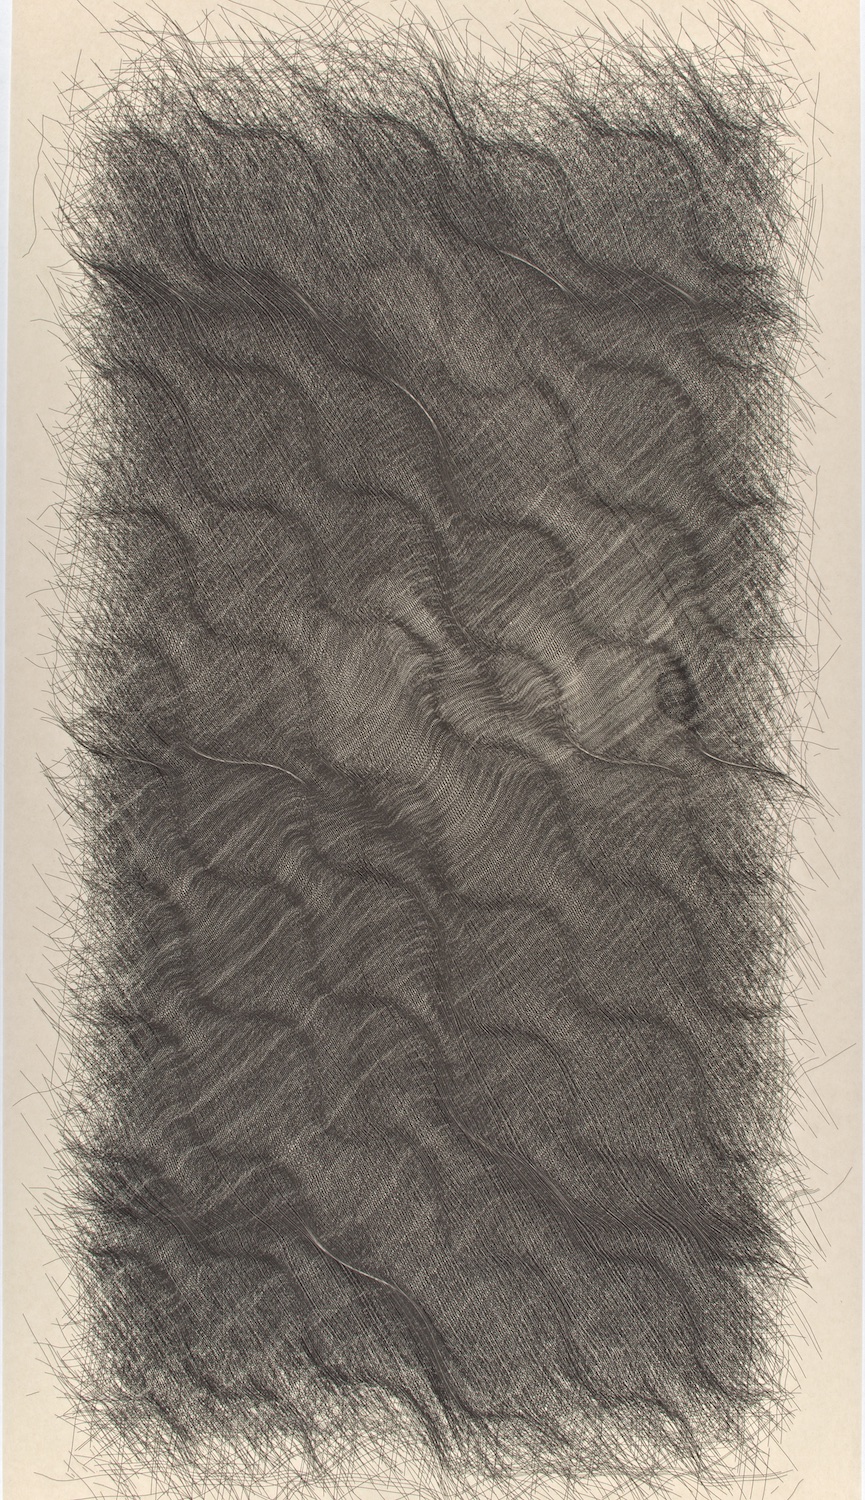  H1   Digital drawing, inkjet pigments, 2011    Art : 33.5”x16.75”&nbsp;    Paper: Niyodo natural,     35”x17”  